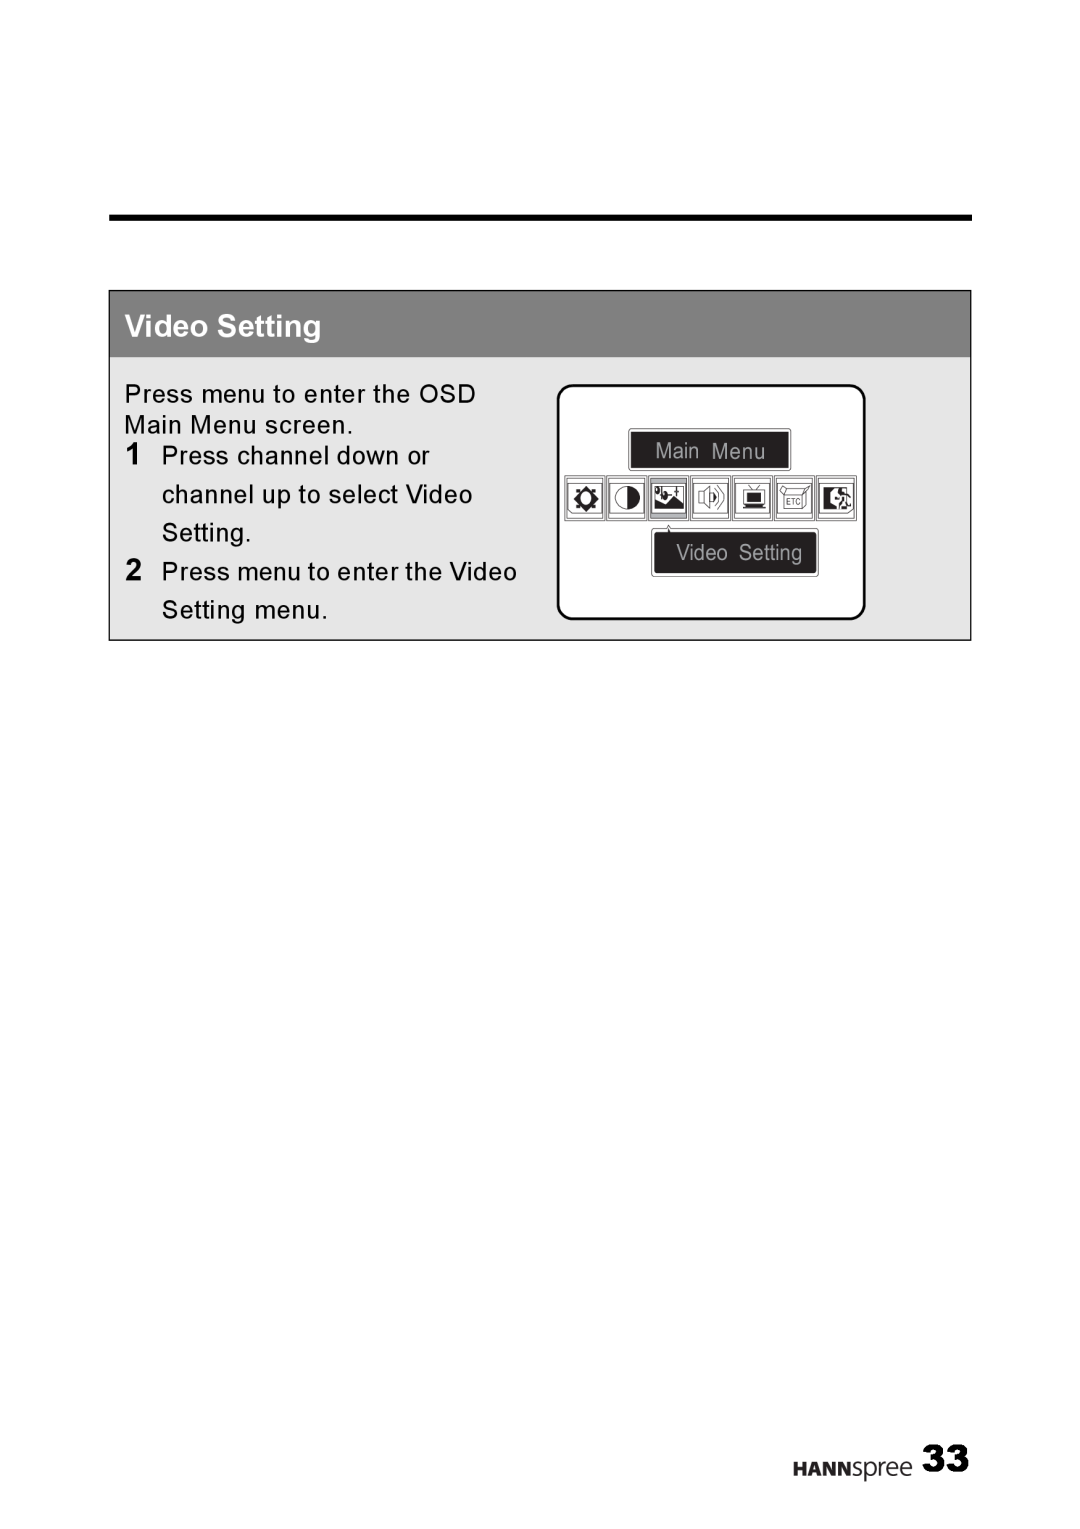 HANNspree LT02-12U1-000 user manual Video Setting, Press menu to enter the OSD Main Menu screen 